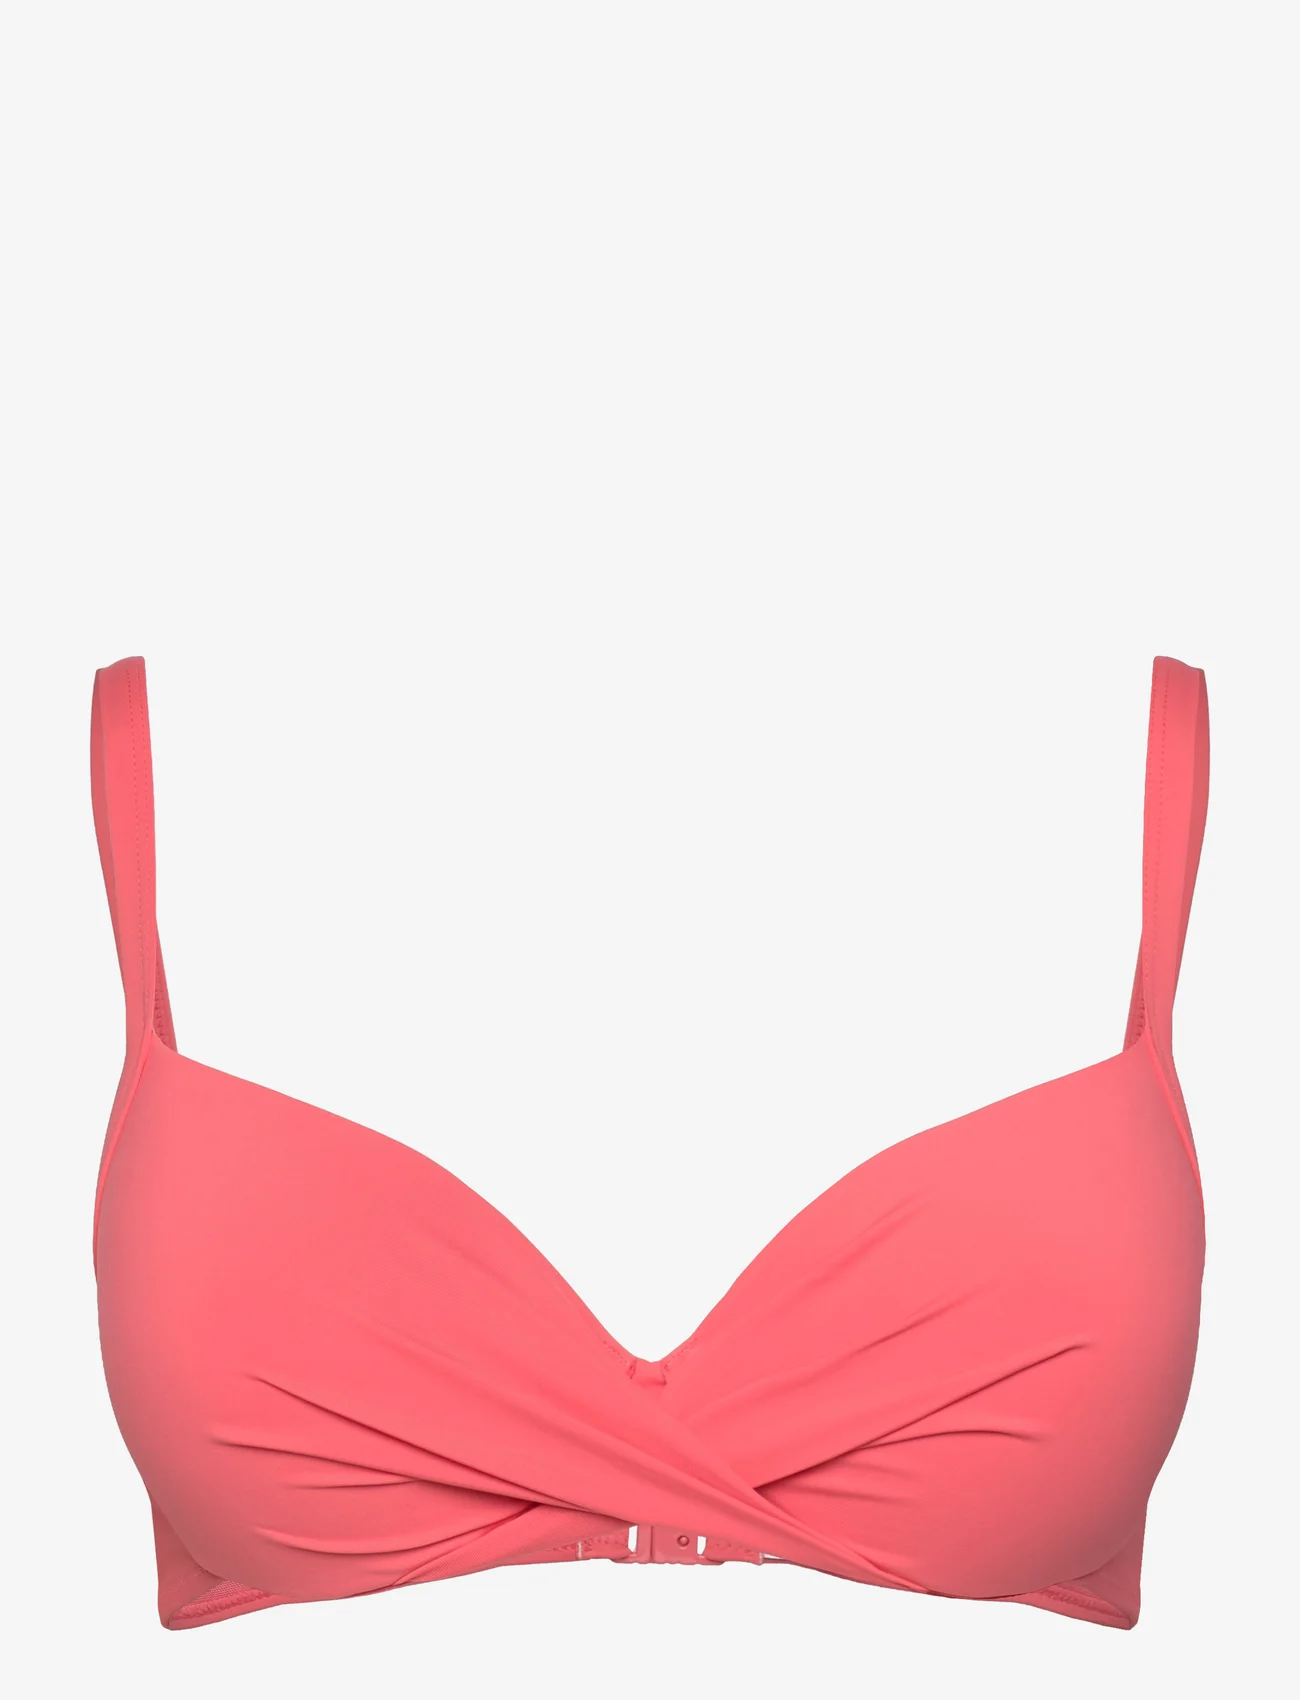 Femilet - Tanna Bikini Push-up bra - bikinien push-up-yläosat - pink coral - 1